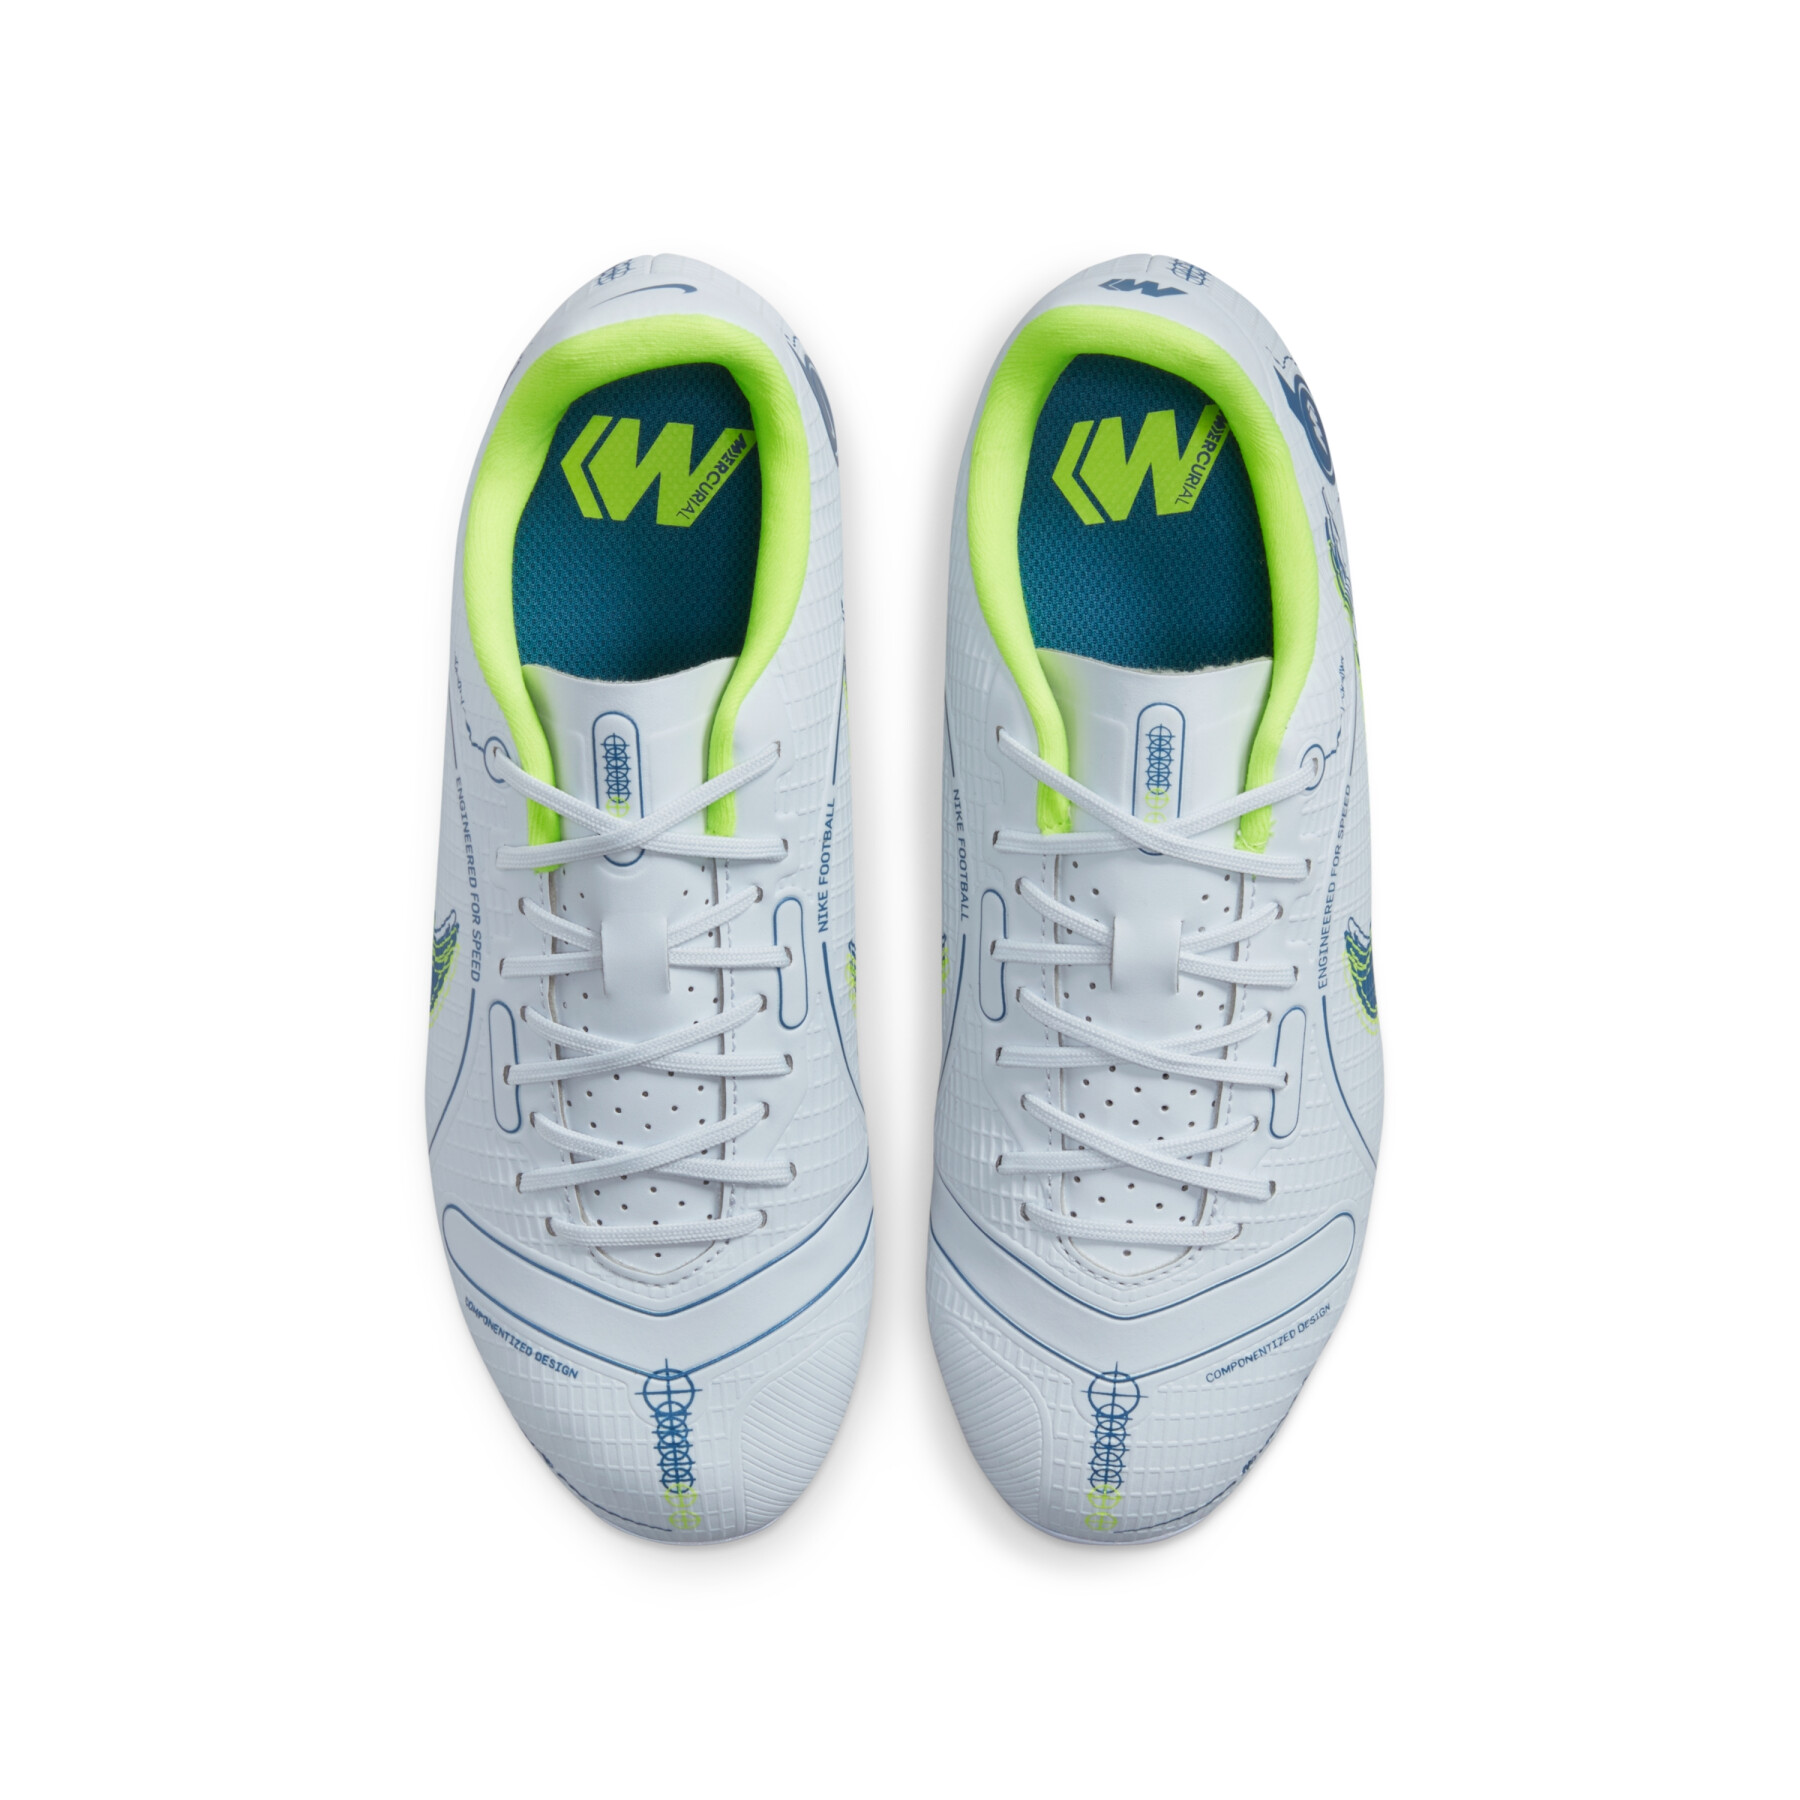 Chaussures de football enfant Nike Jr. Mercurial Vapor 14 Academy MG